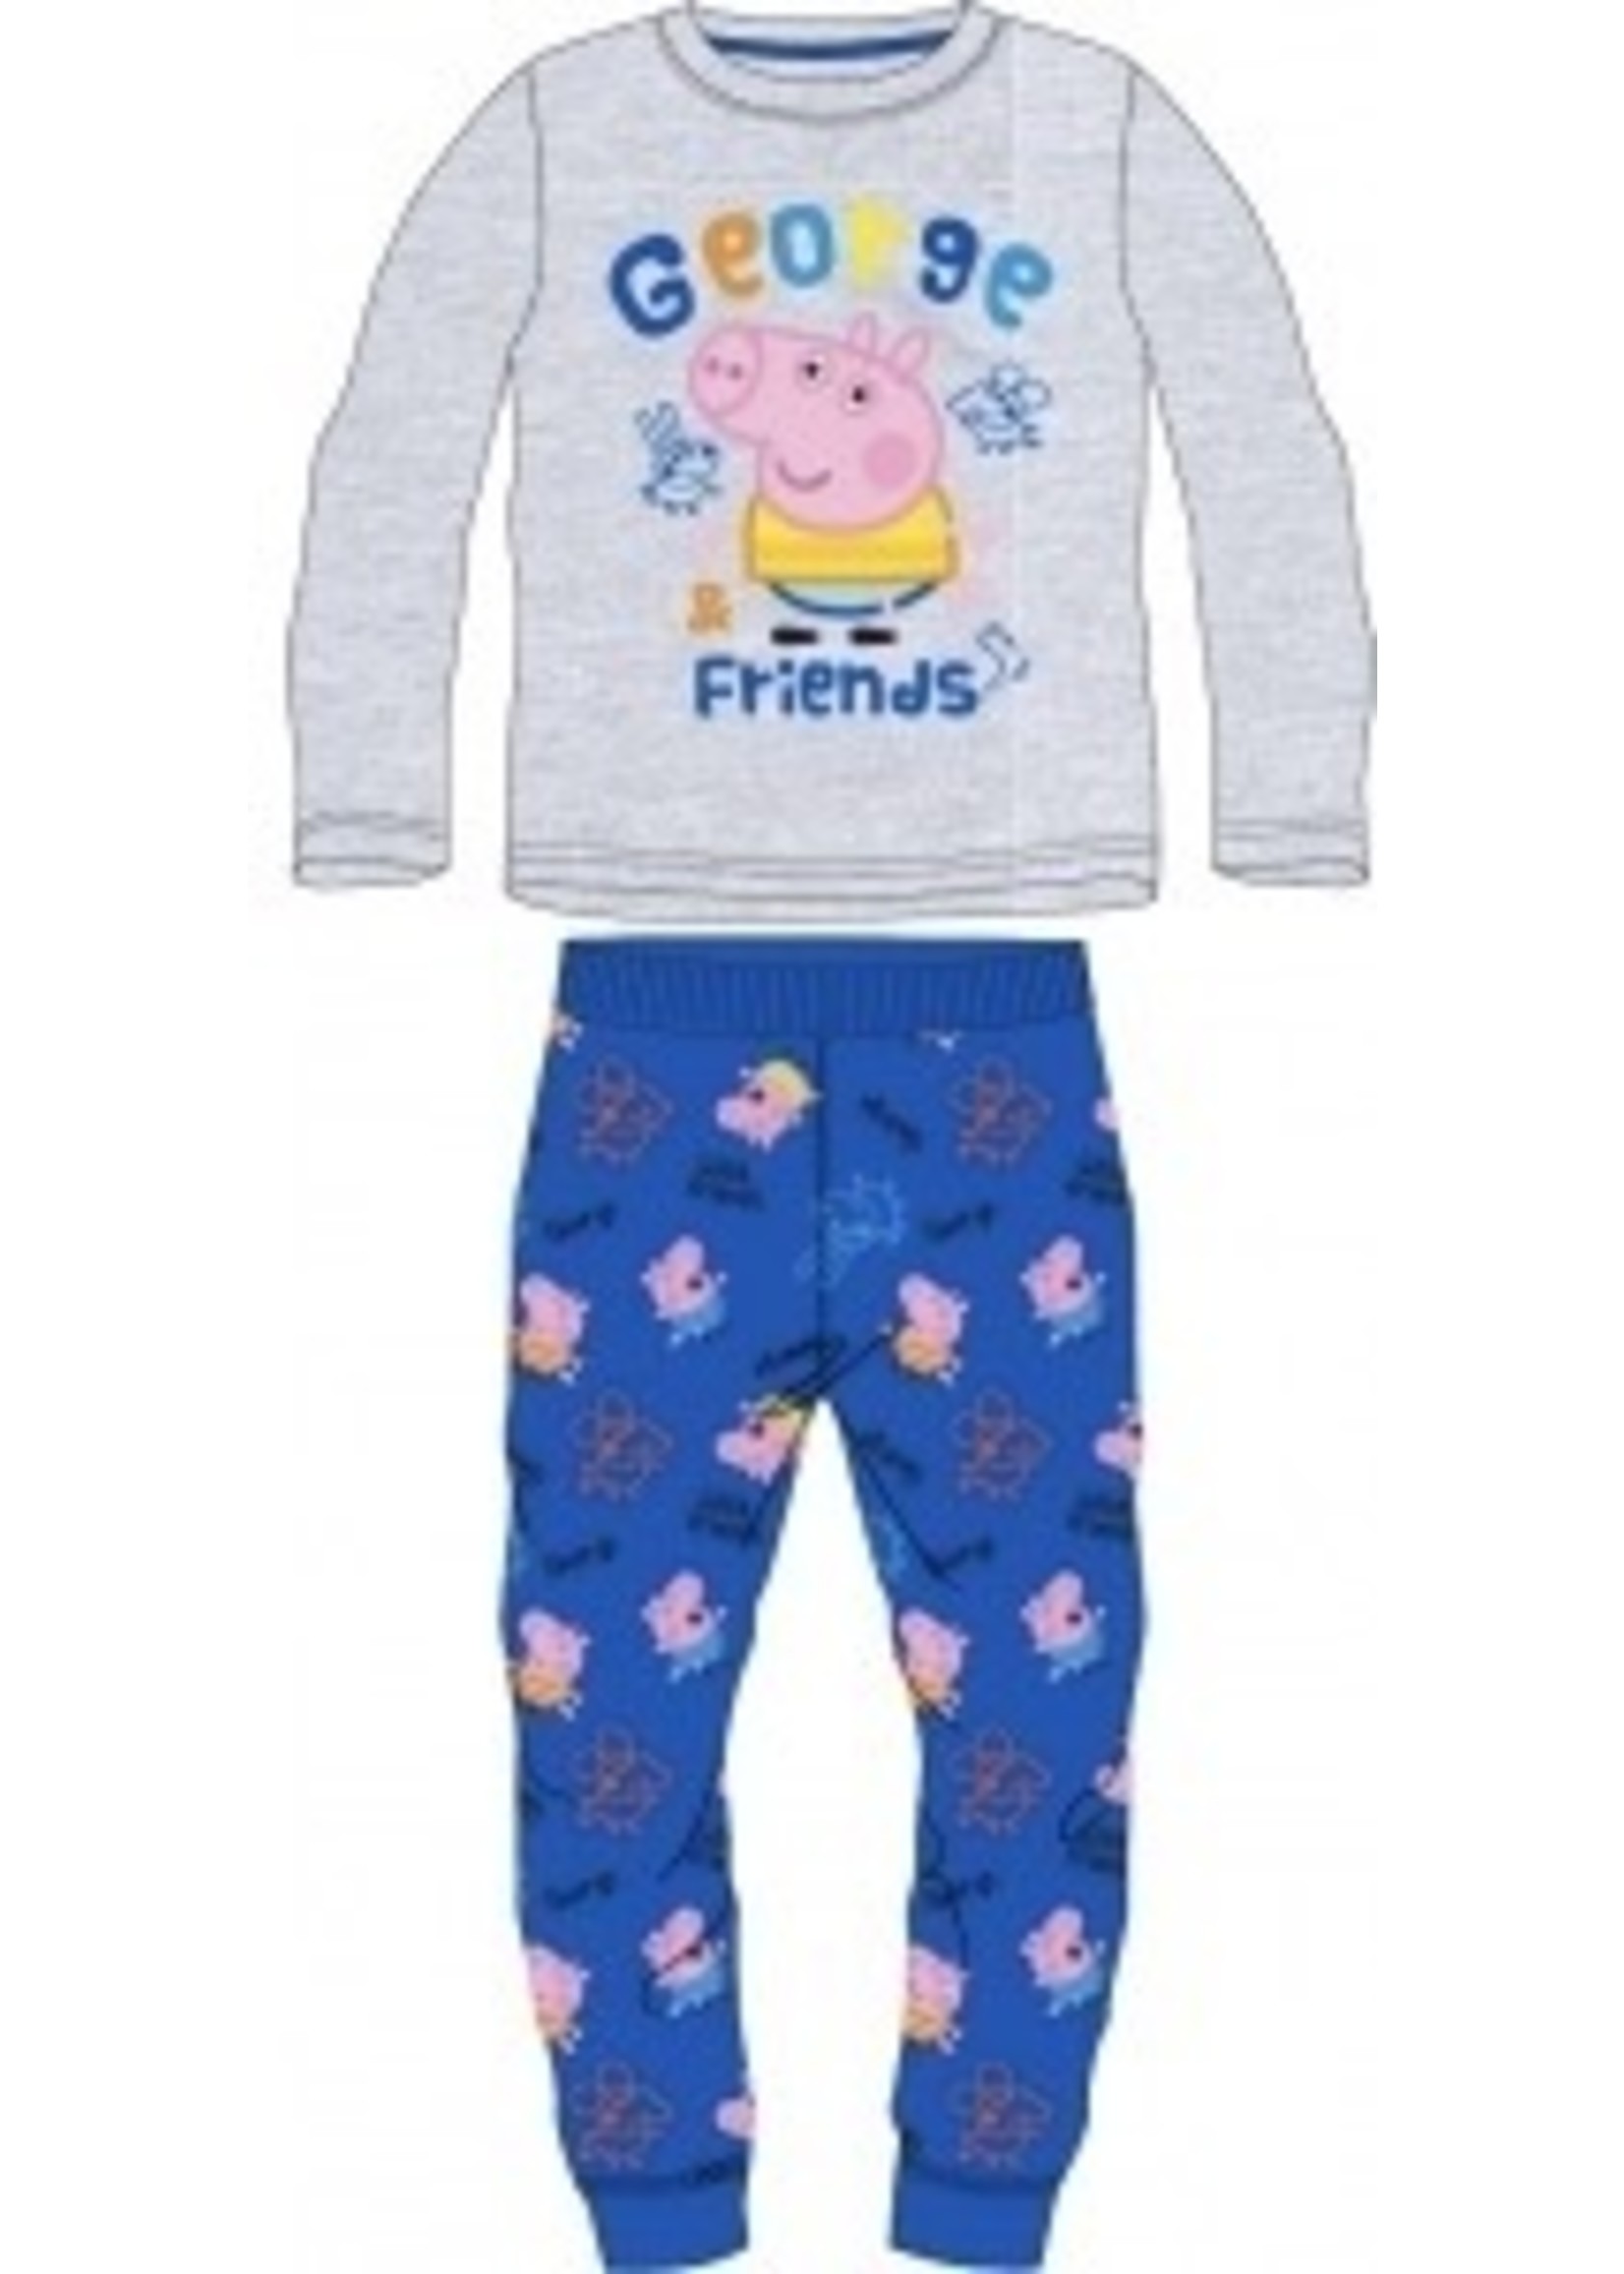 Peppa Pig  Peppa Pig pajamas from Peppa Pig grey/blue